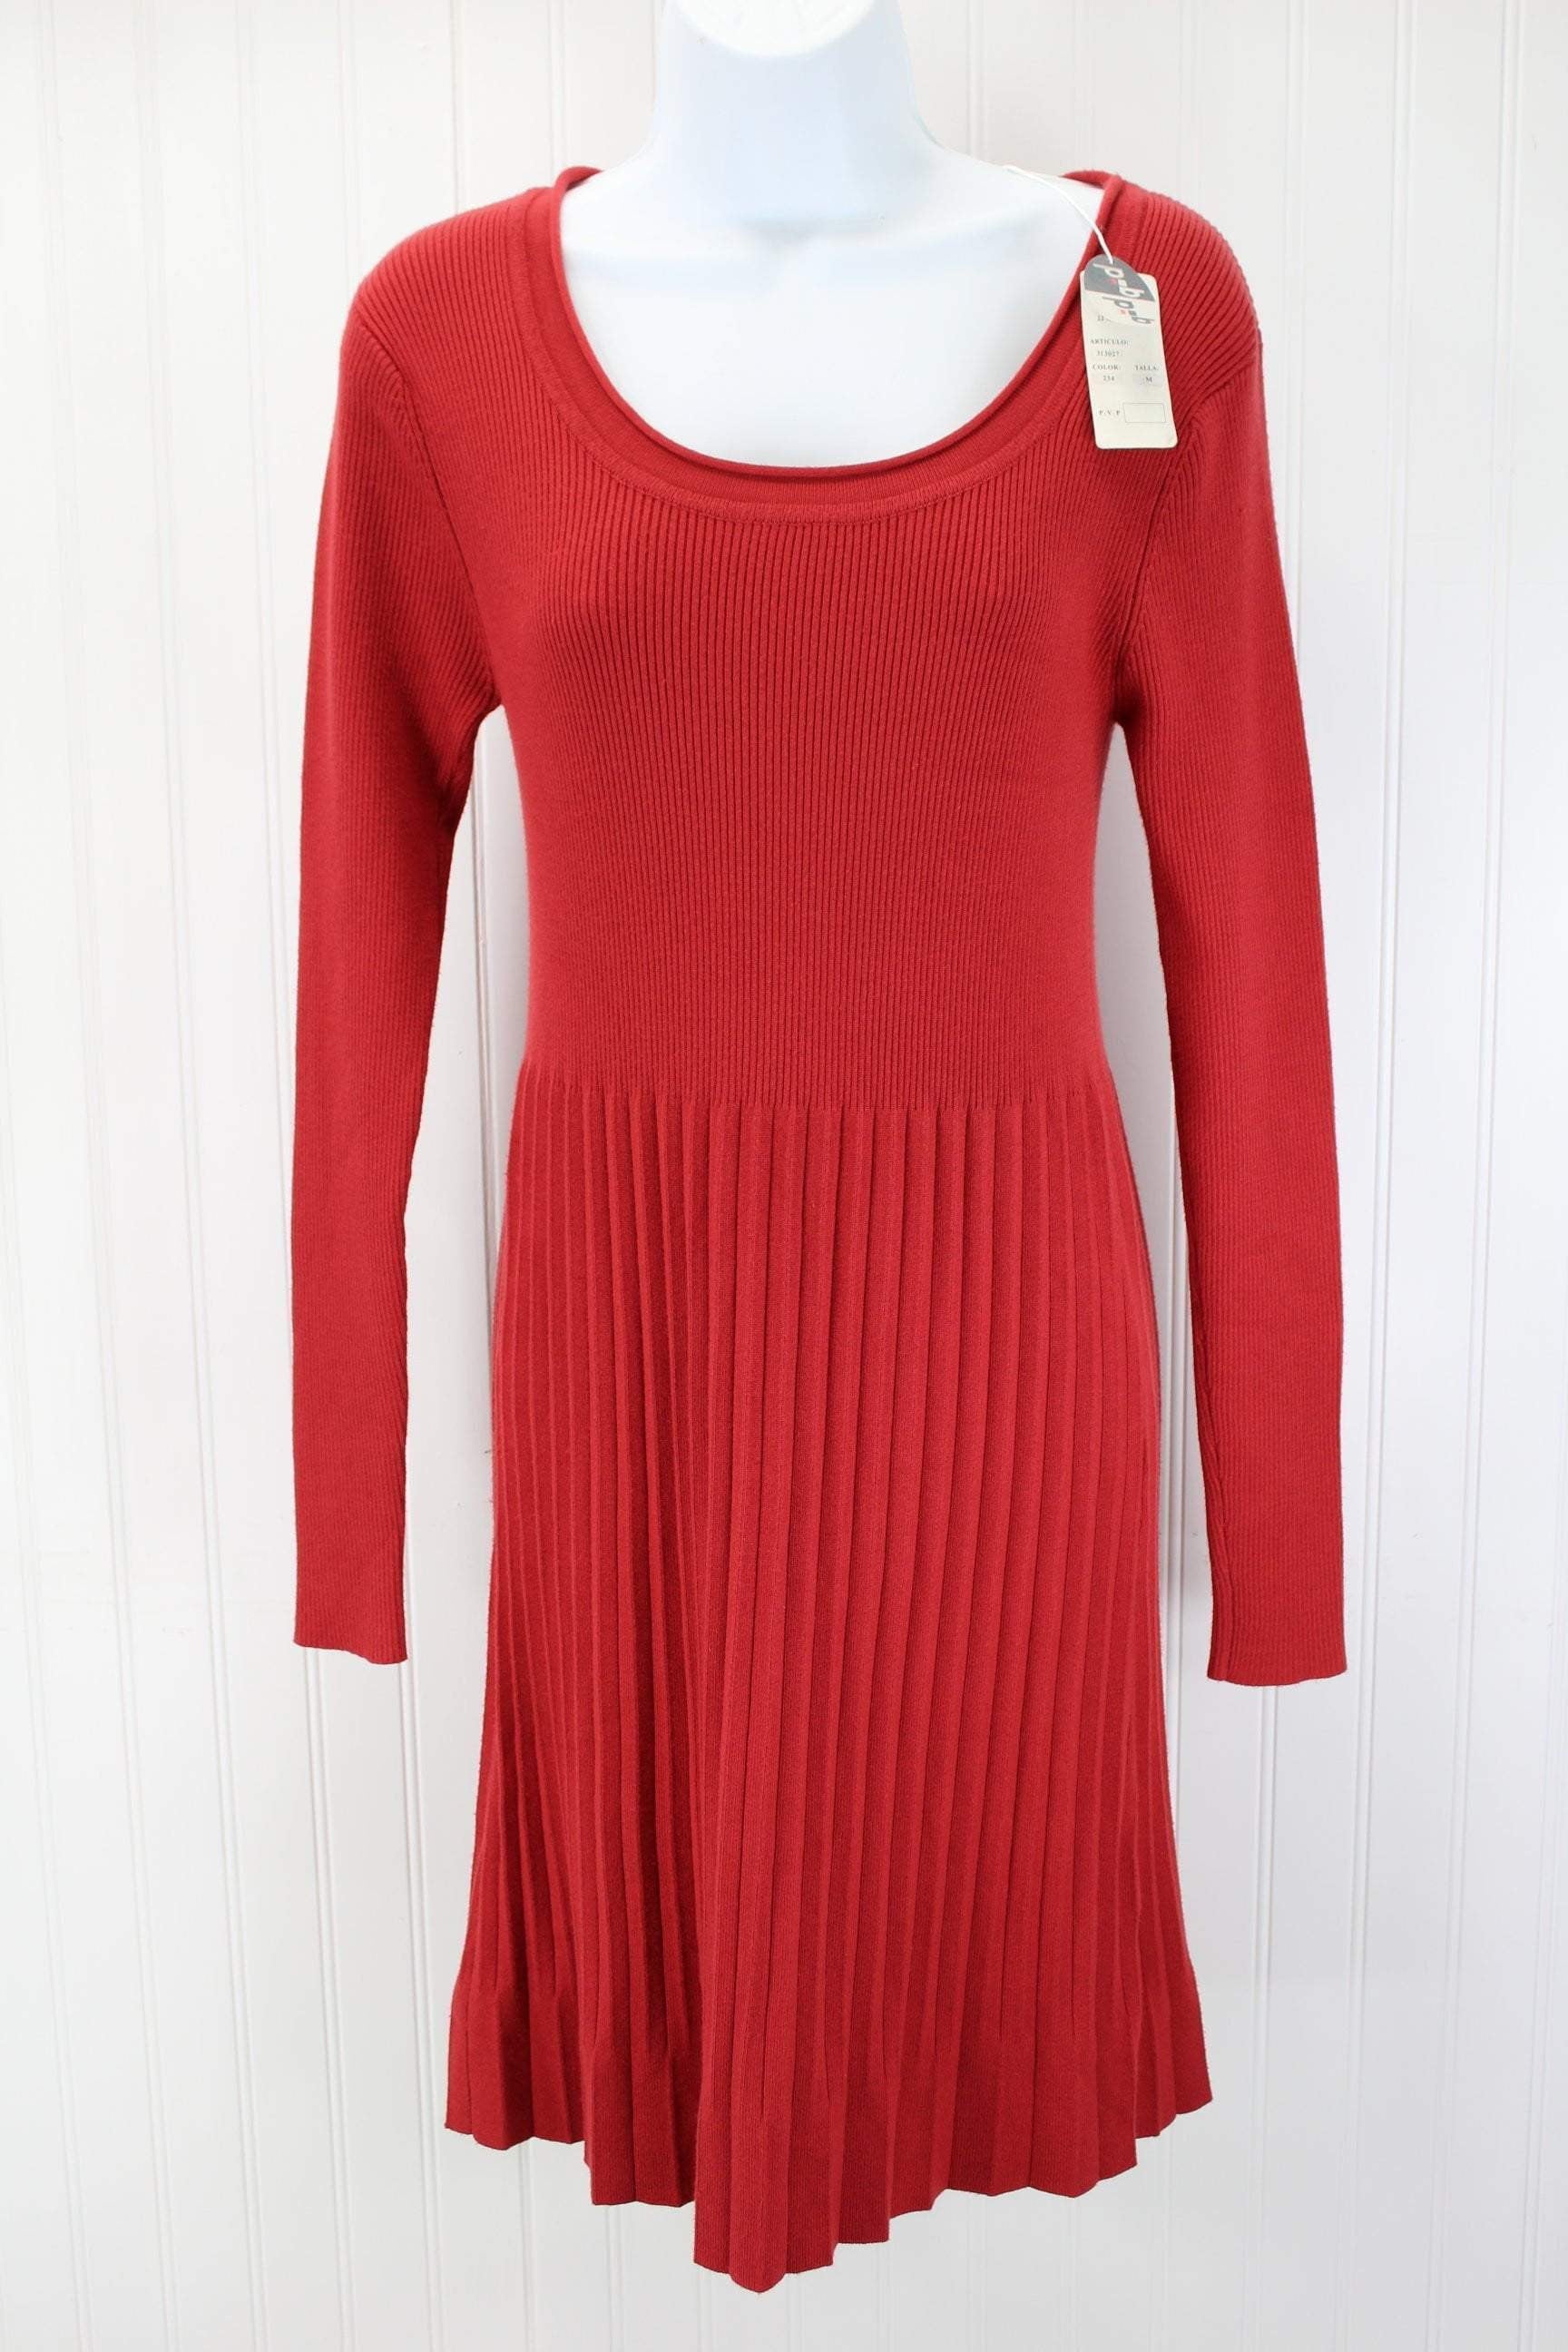 bip-bip Dress - Burnt Sienna Knit Scoop Neck Pleated Size M Zaragoza Spain sensual stretch knit